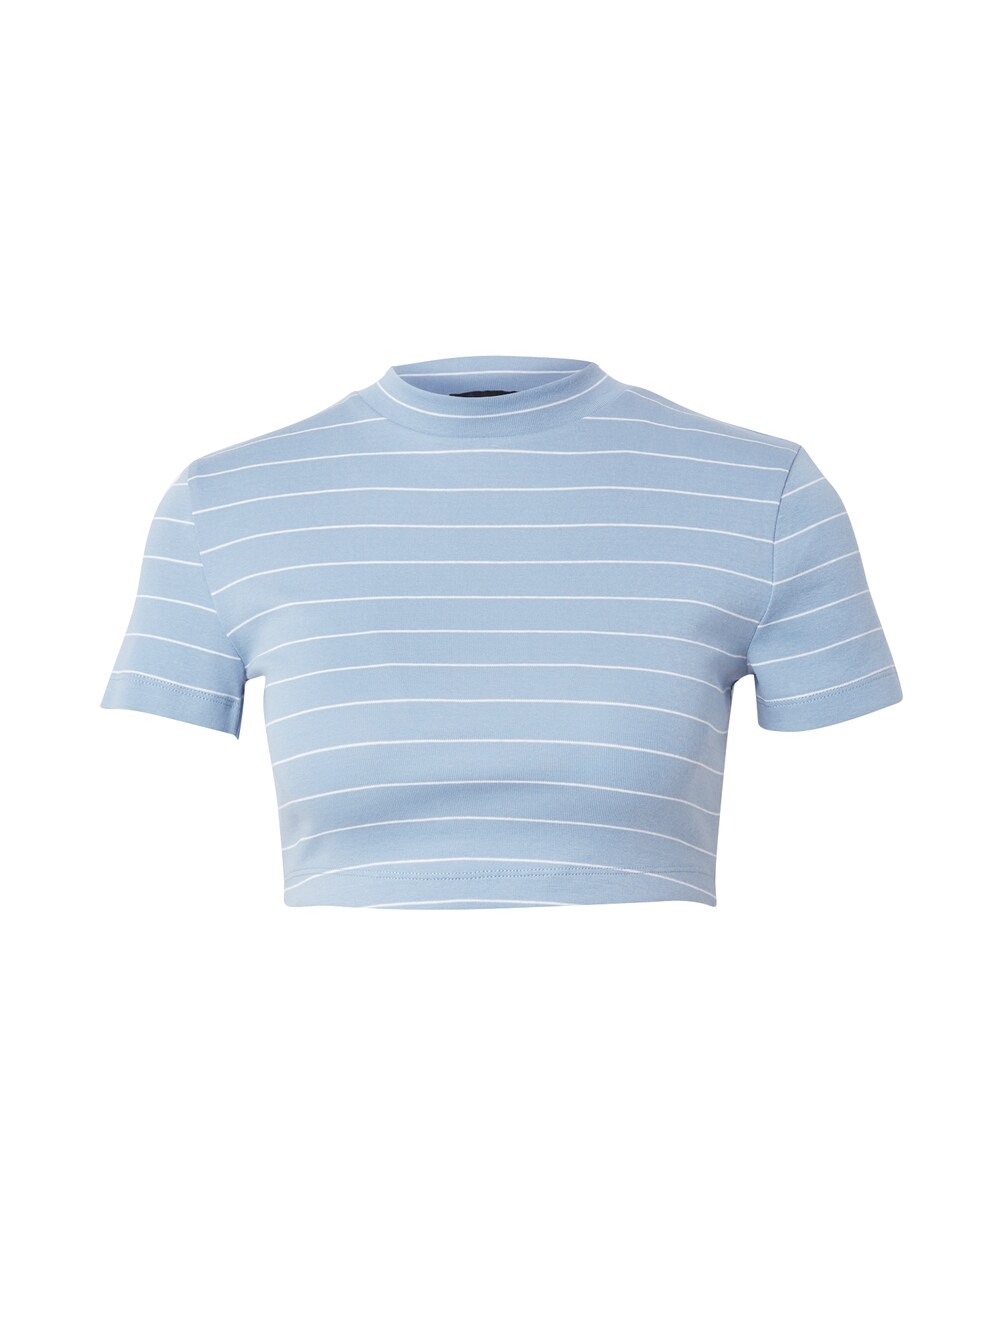 Рубашка Tally Weijl, светло-синий футболка tally weijl размер xxs розовый